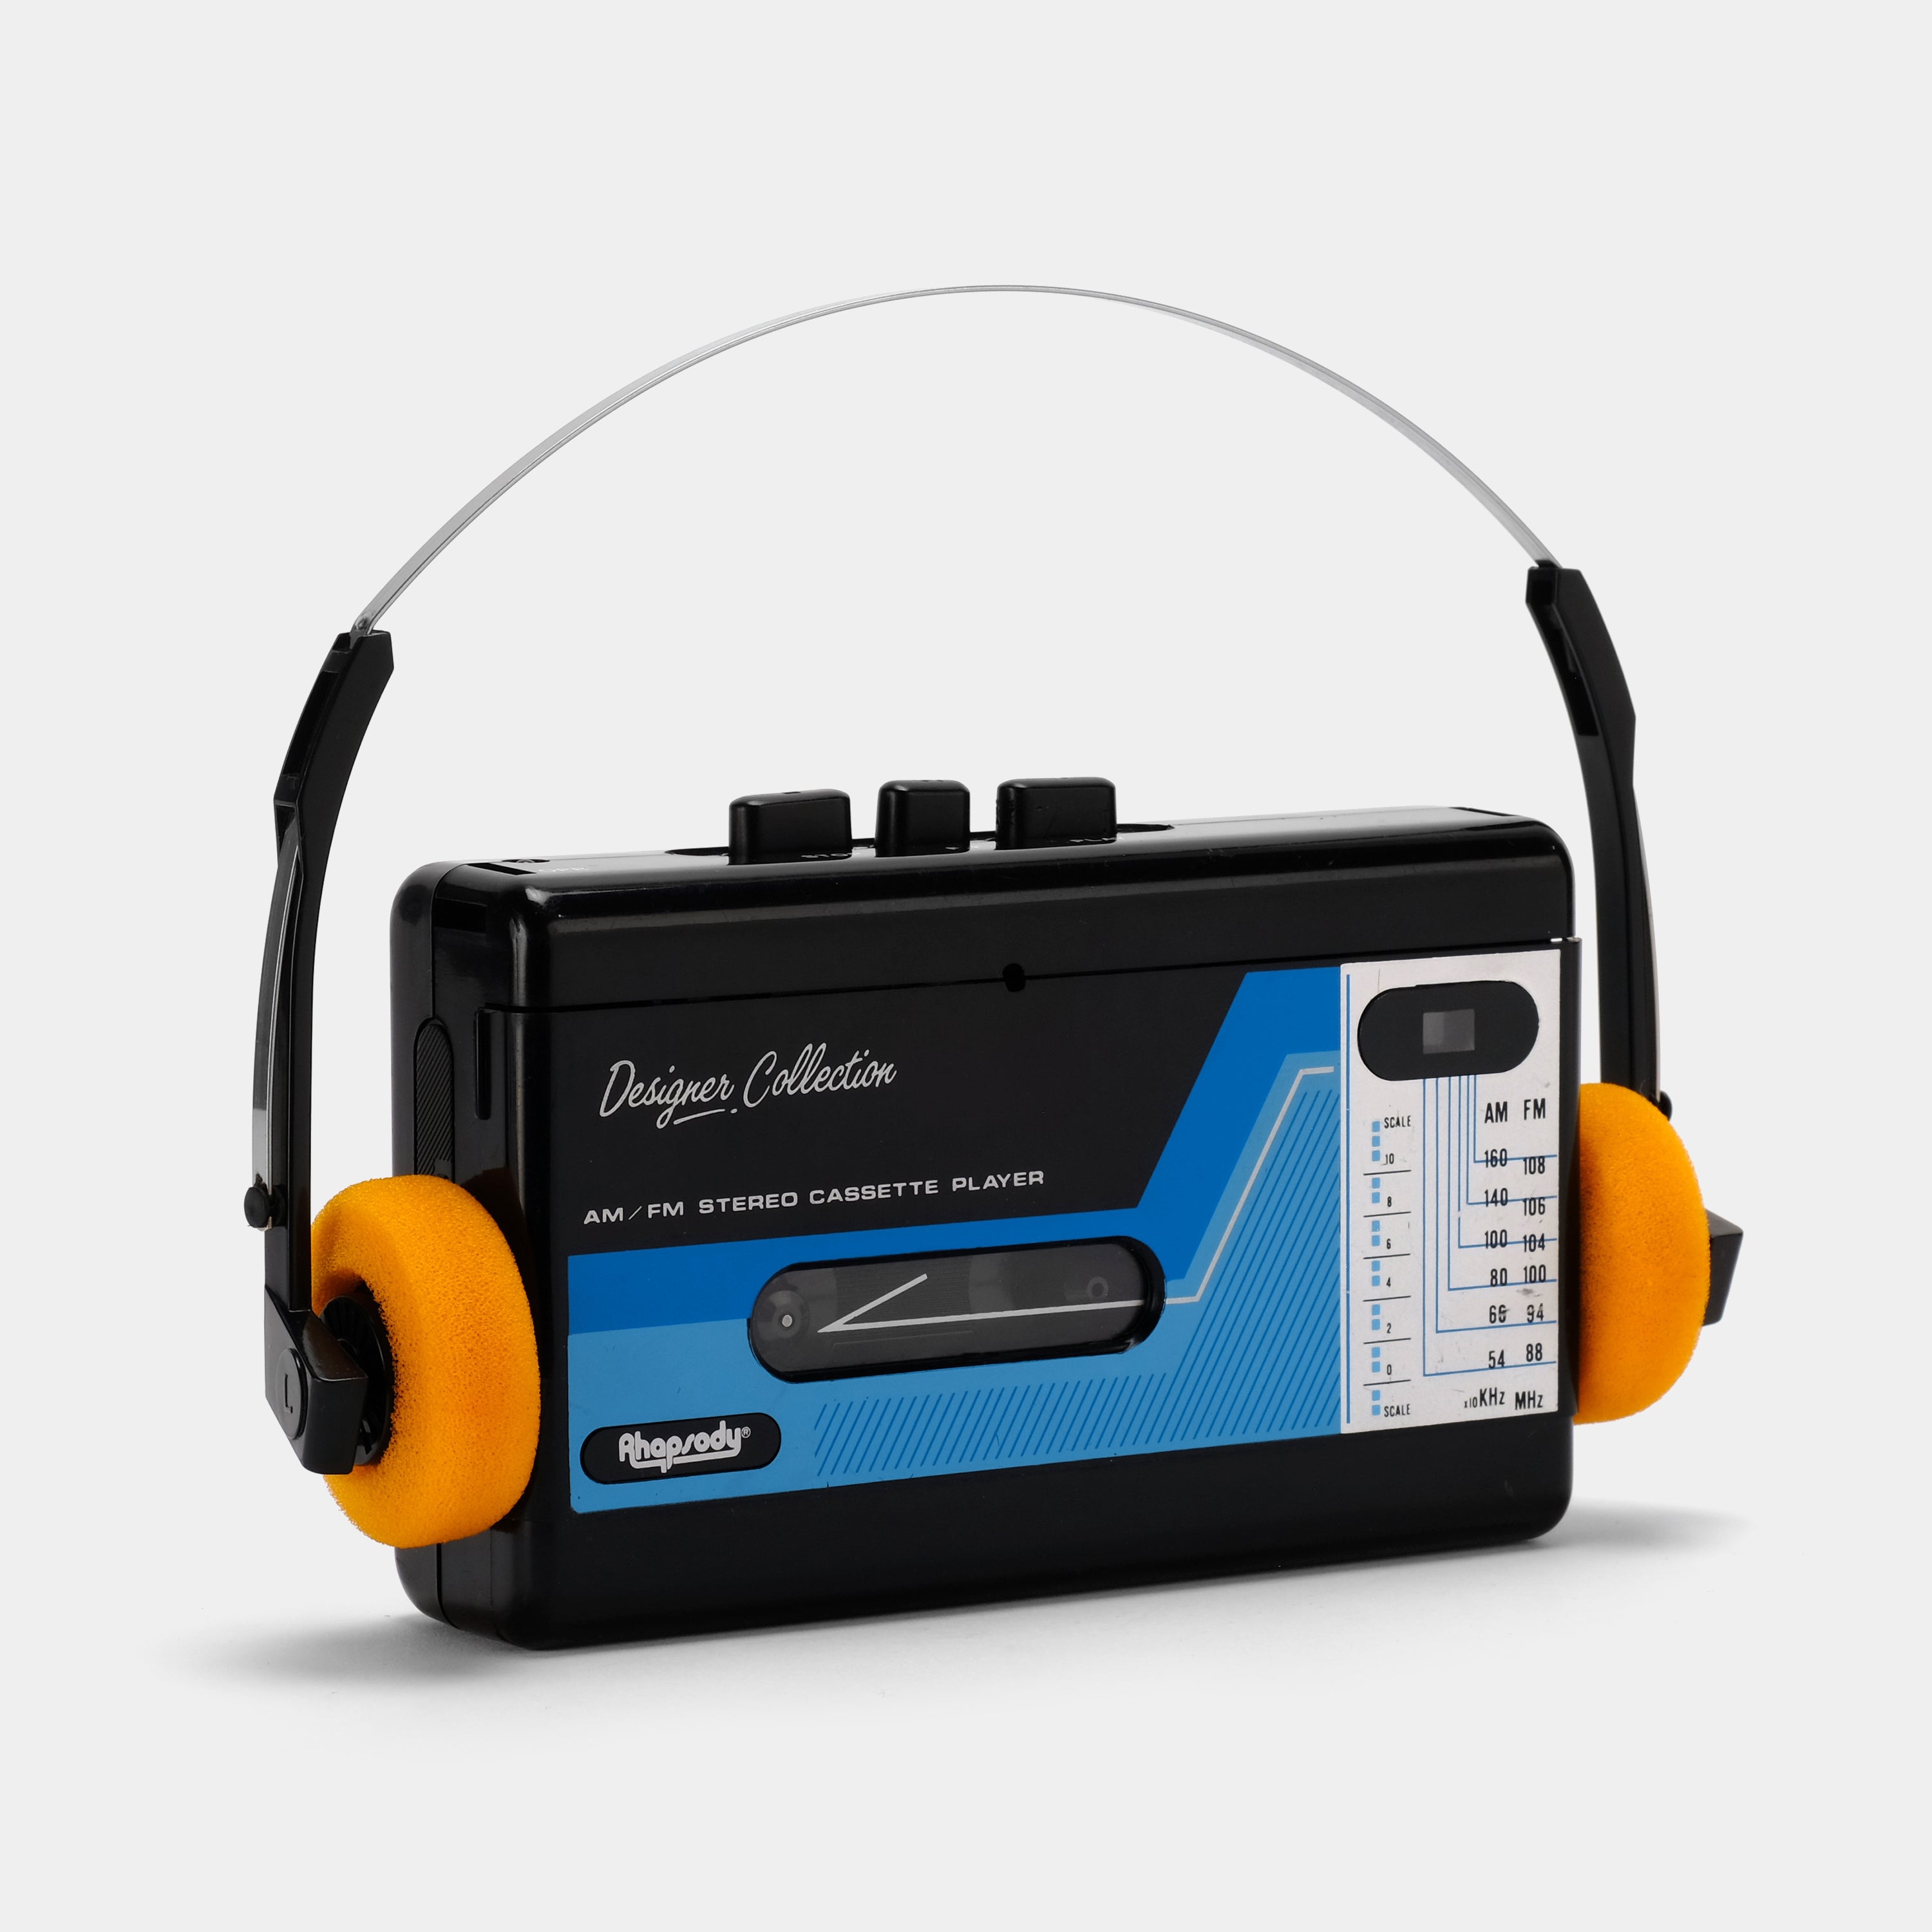 Rhapsody Designer Collection Stereo AM/FM Portable Cassette Player